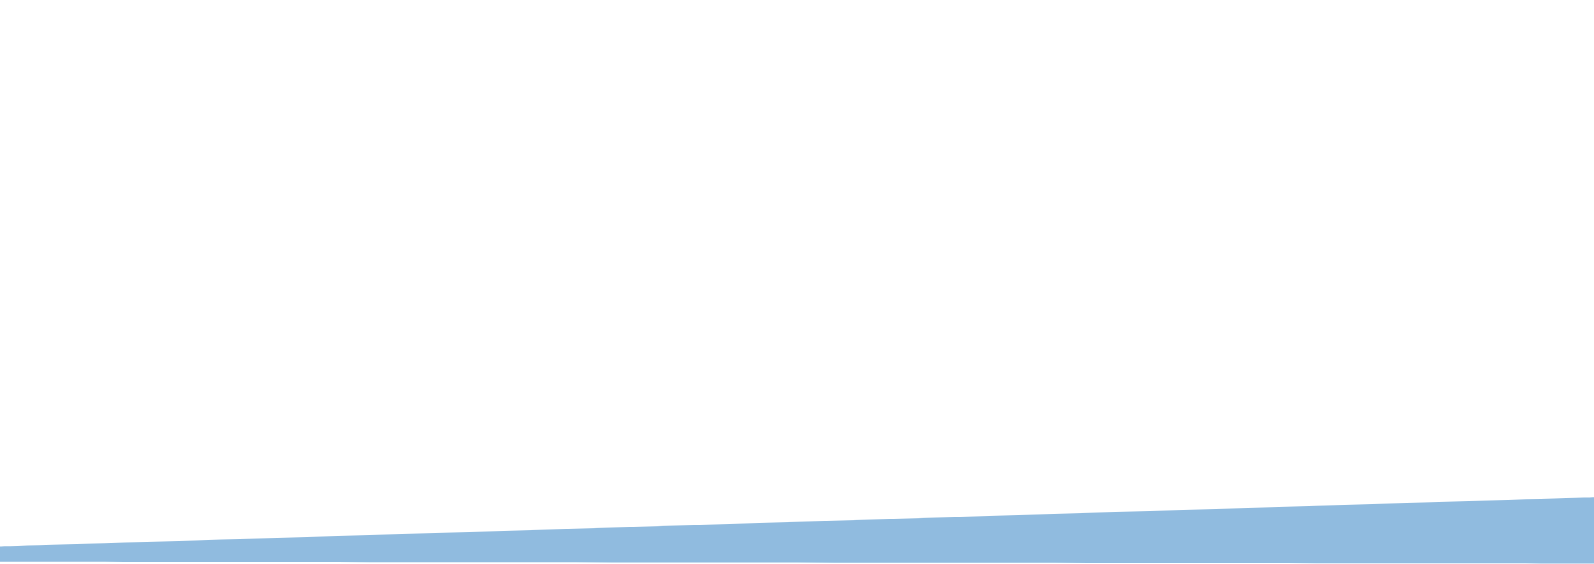 kneat.com logo grand pour les fonds sombres (PNG transparent)